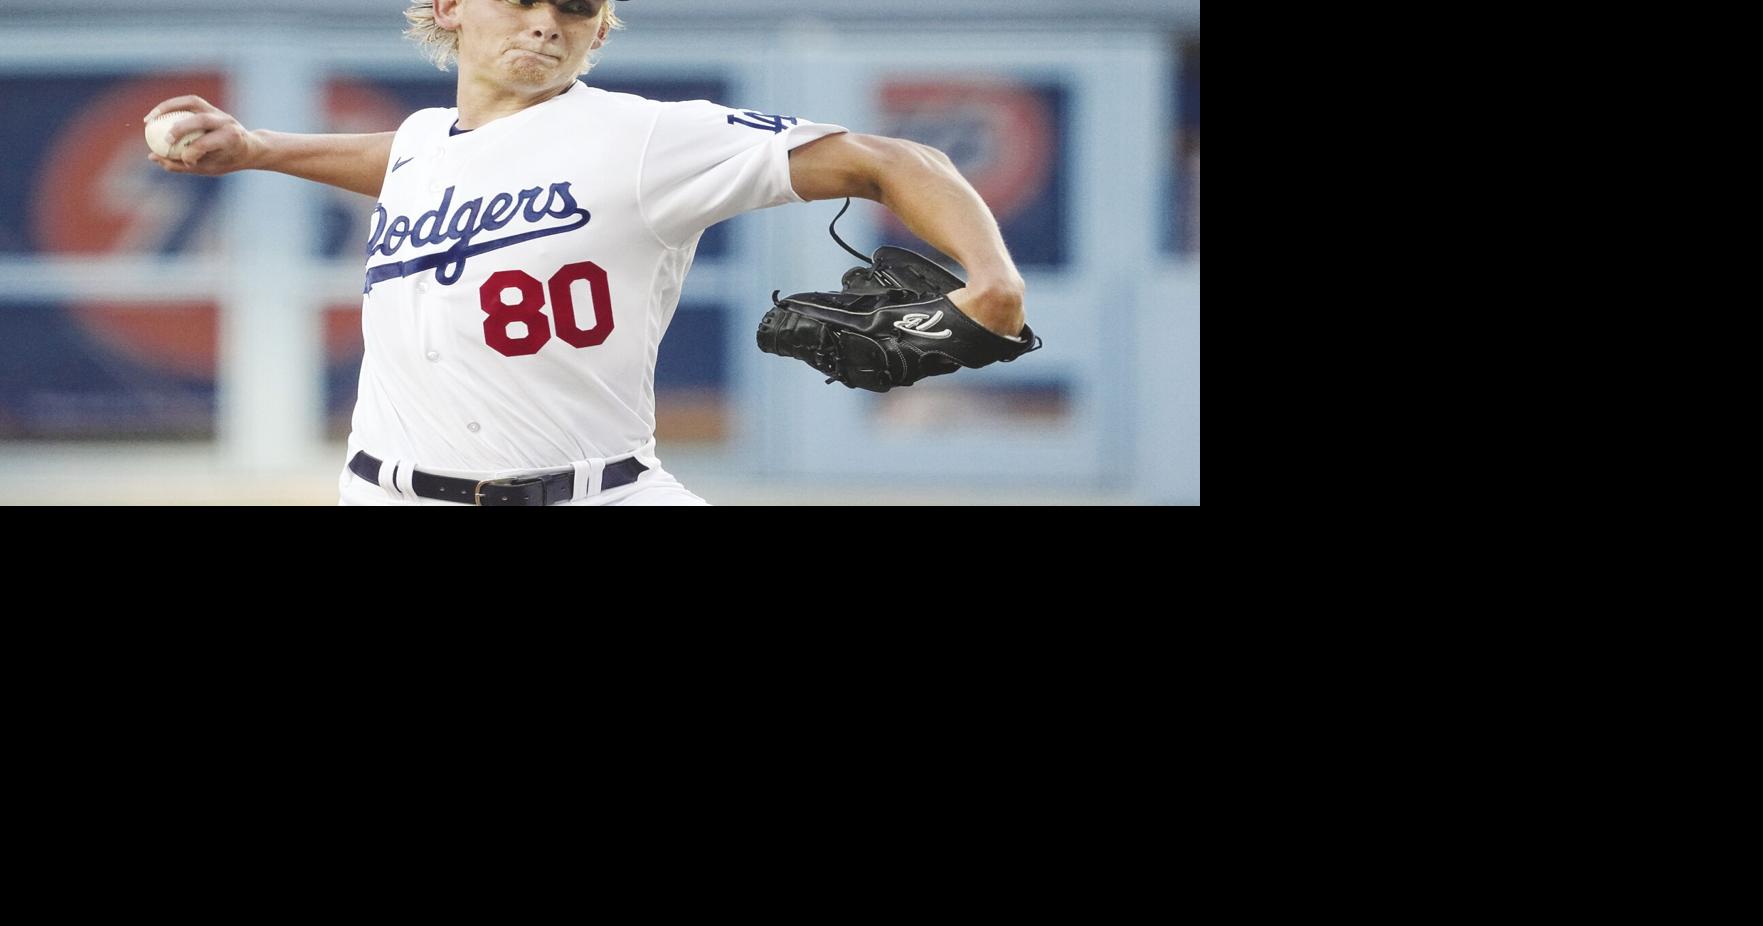 Dodgers: JD Martinez to injured list, Michael Busch promoted